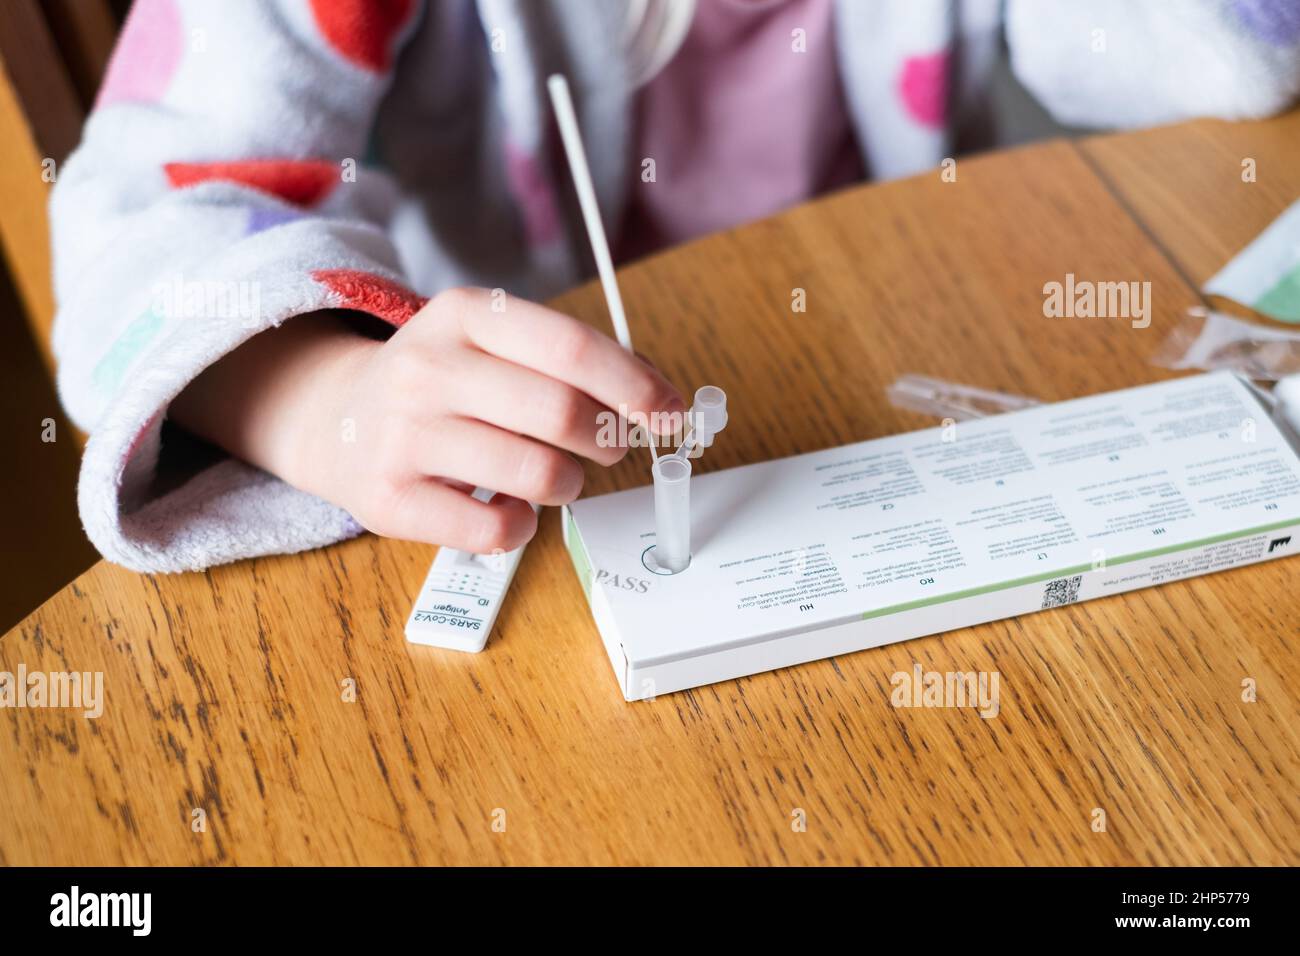 Child testing herself for coronavirus at home. Rapid COVID-19 Antigen test kit for self testing. Stock Photo